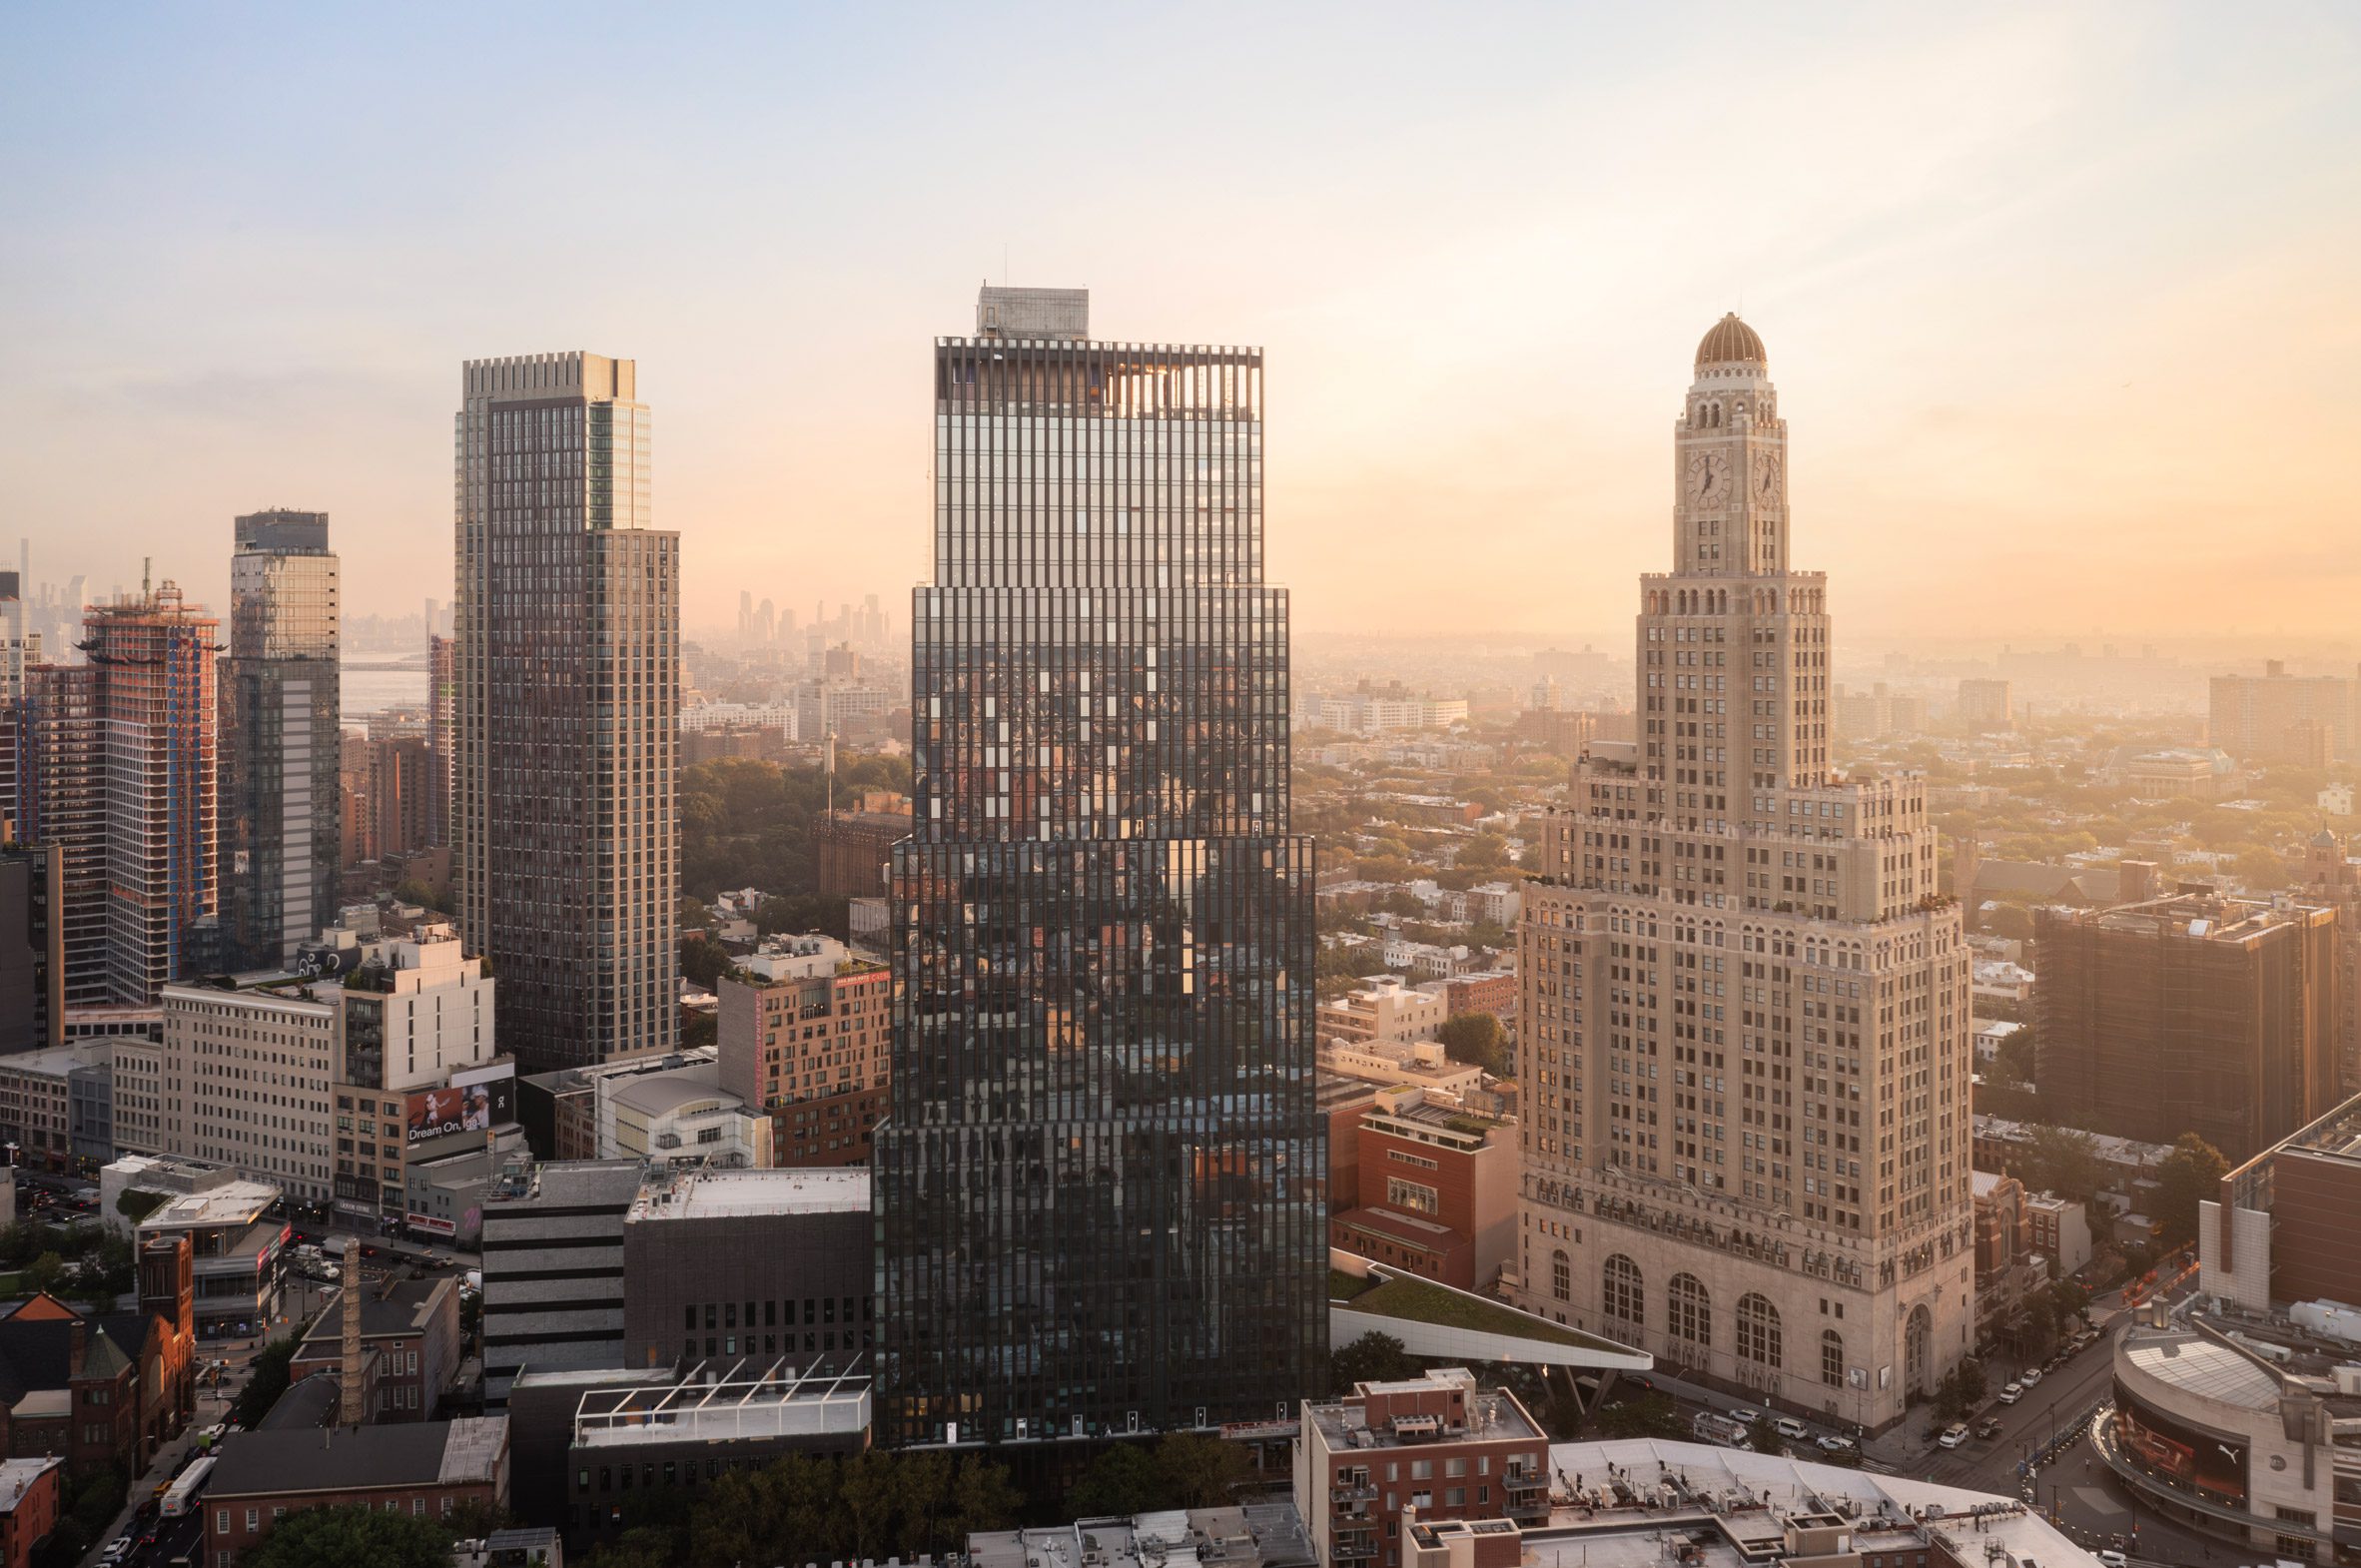 Flat Iron-like skyscraper by Alloy nears completion in Brooklyn